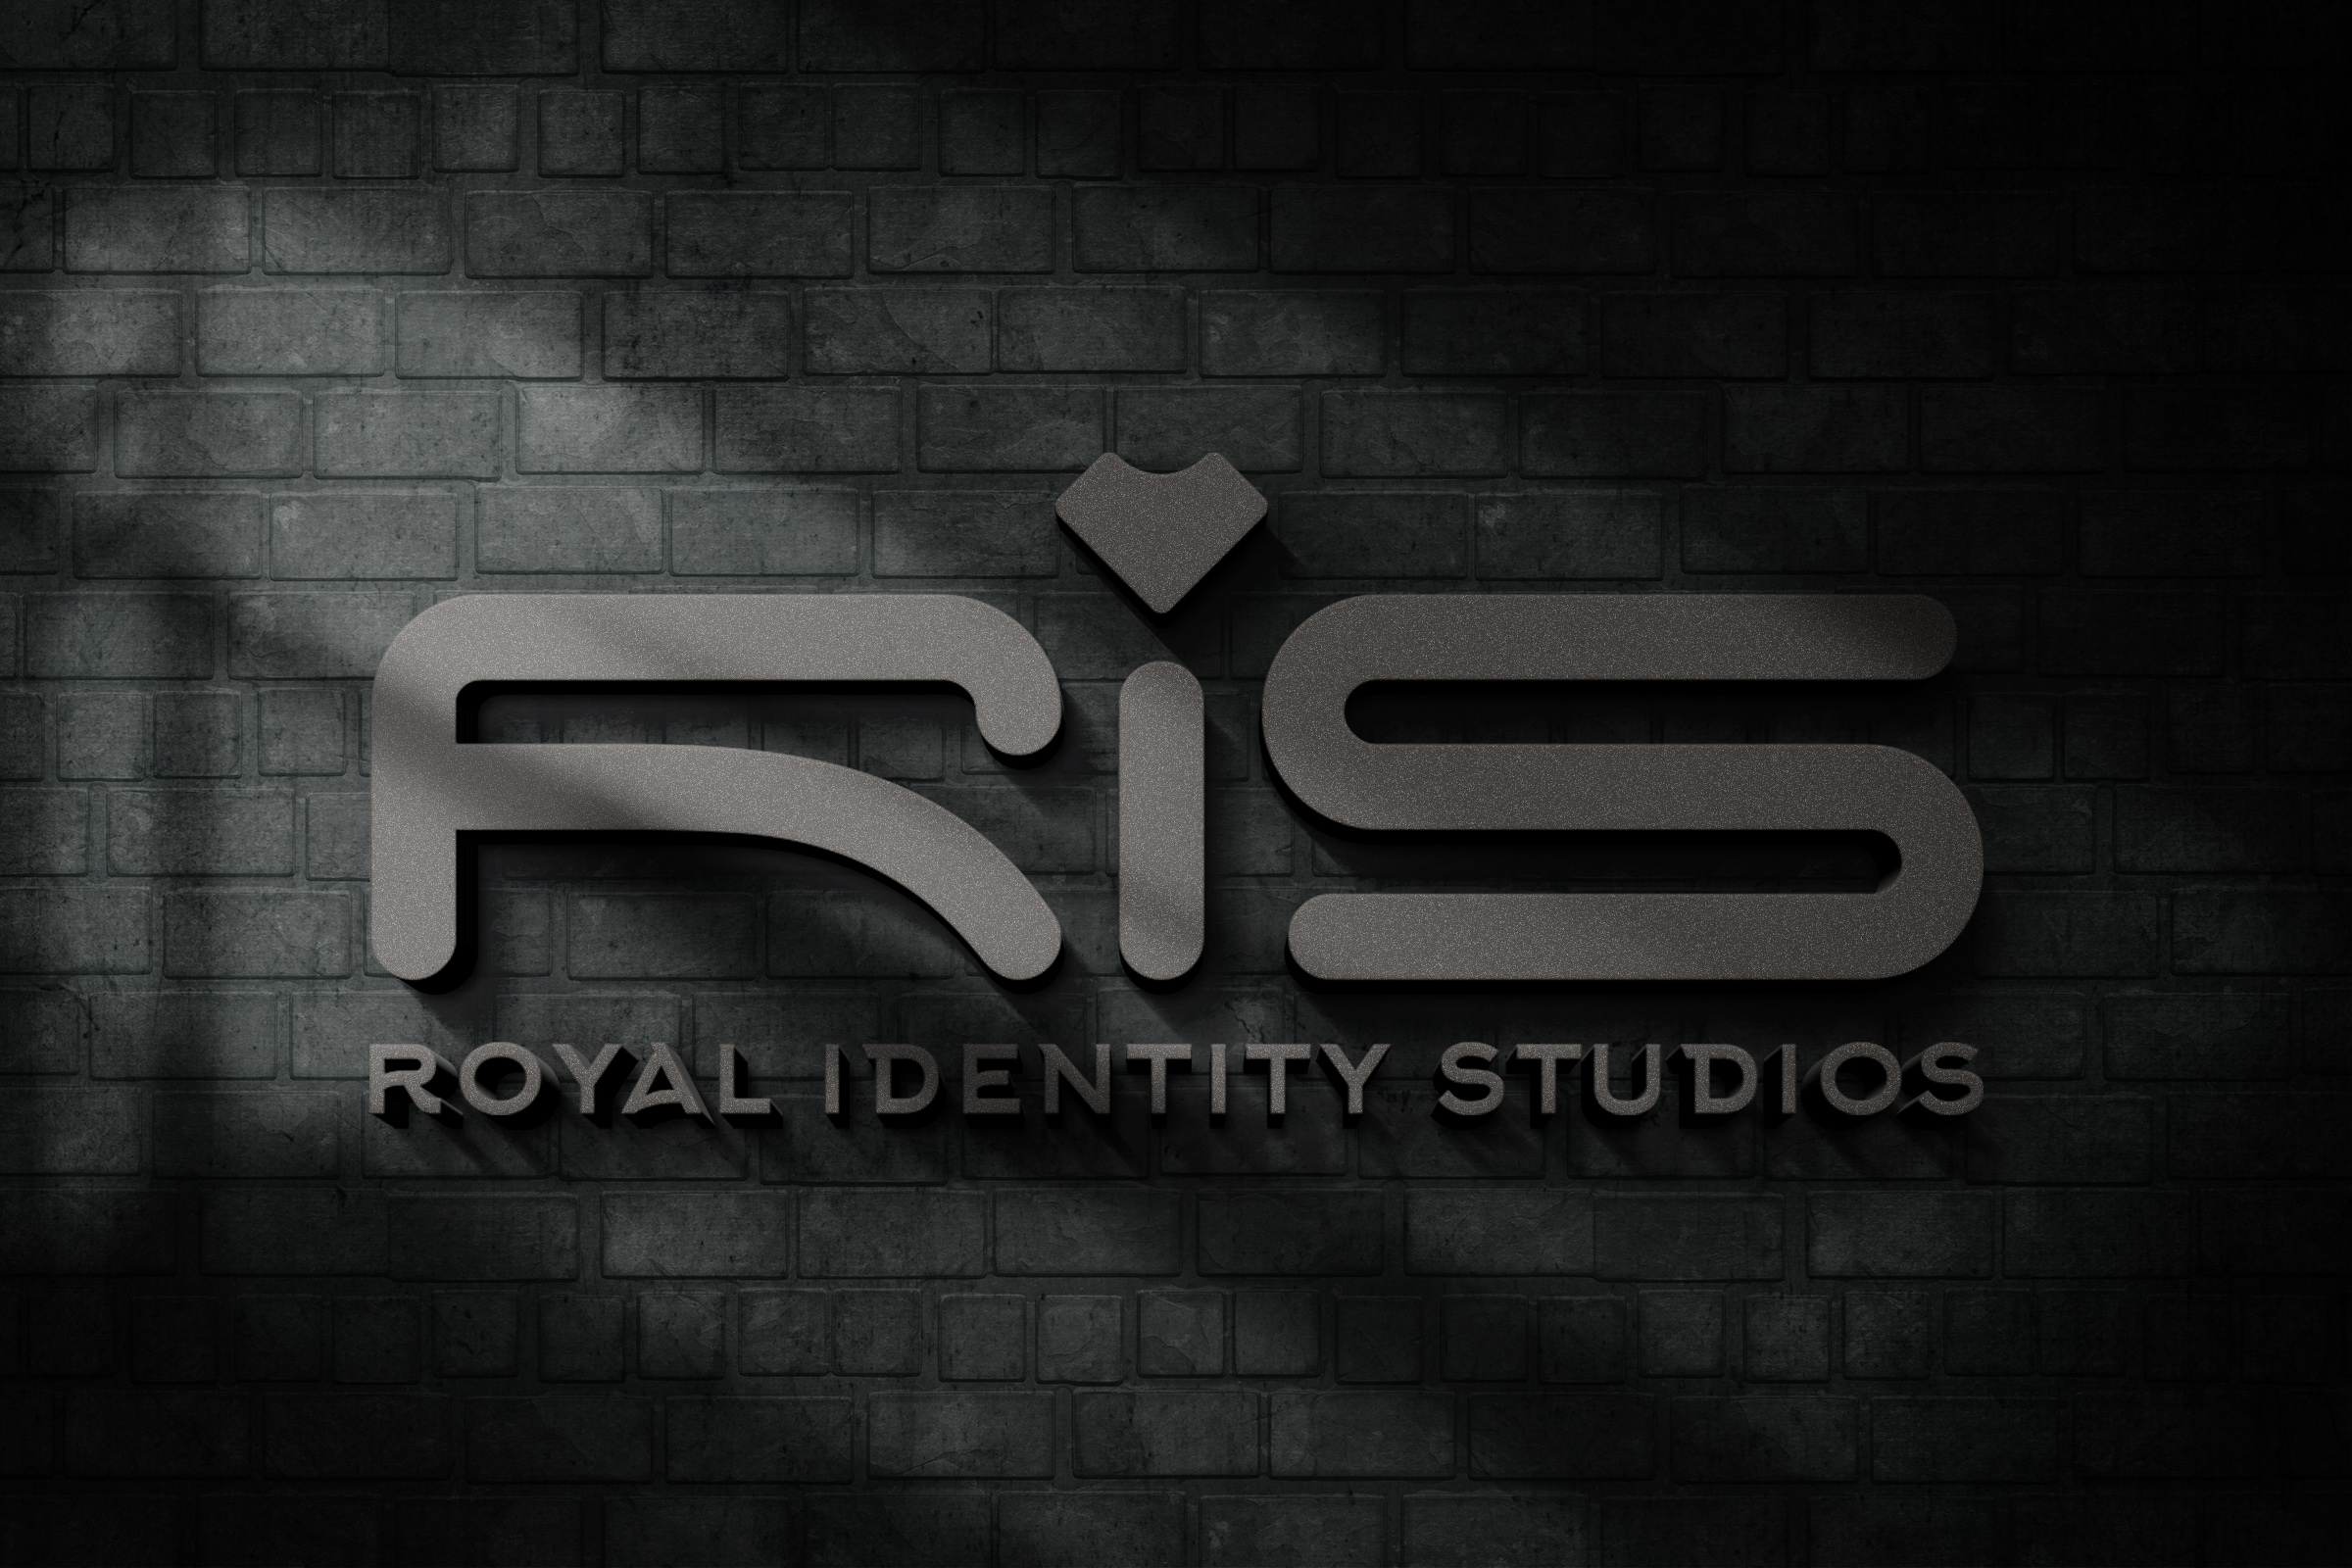 Royal Identity studios digital marketing services